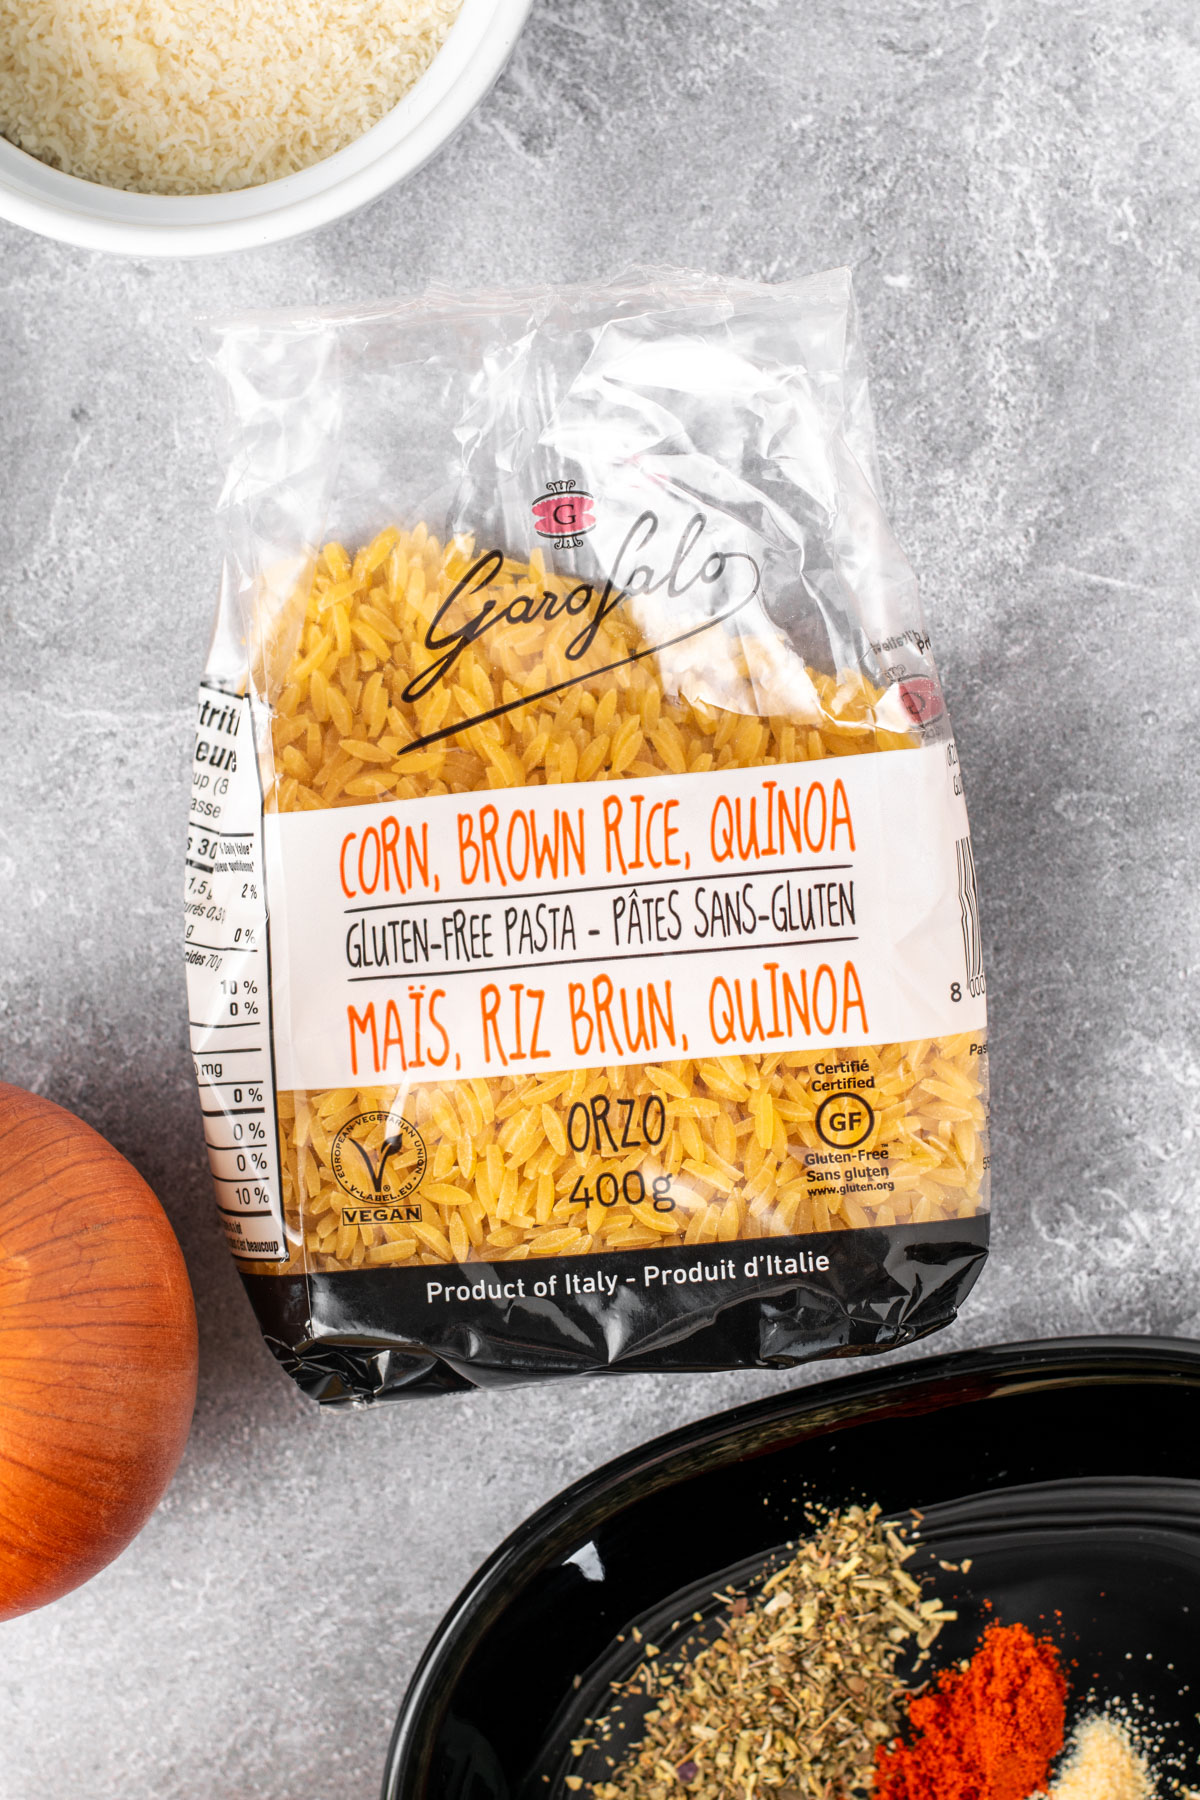 gluten-free orzo packaging from garofalo